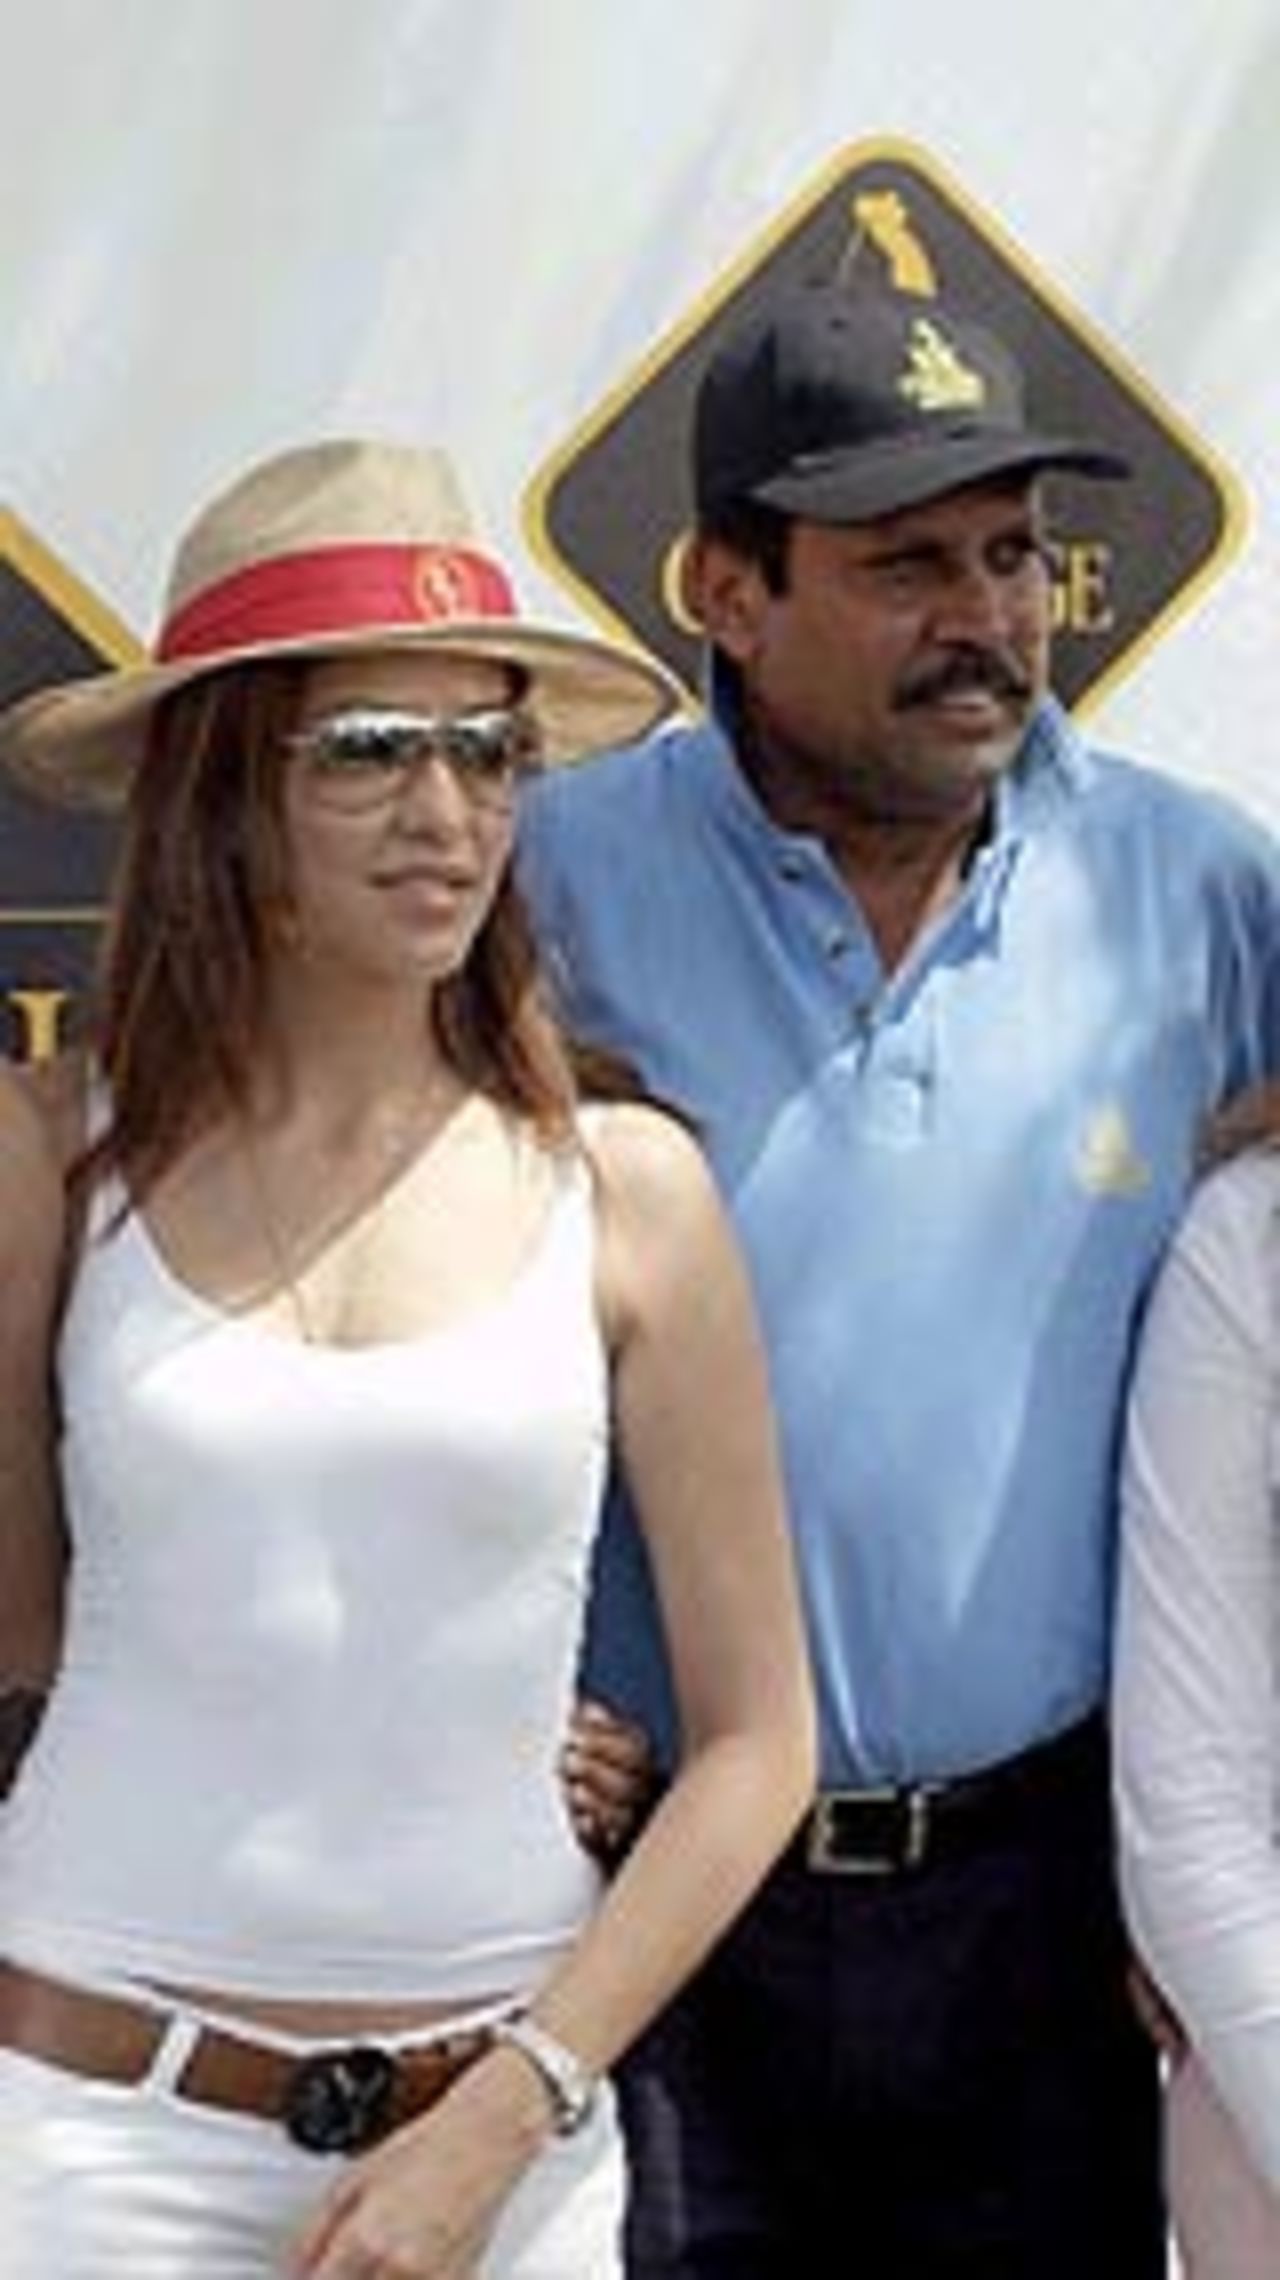 Kapil Dev and Aditi Govitrikar, an Indian model, at a golf tournament in New Delhi, March 23, 2004